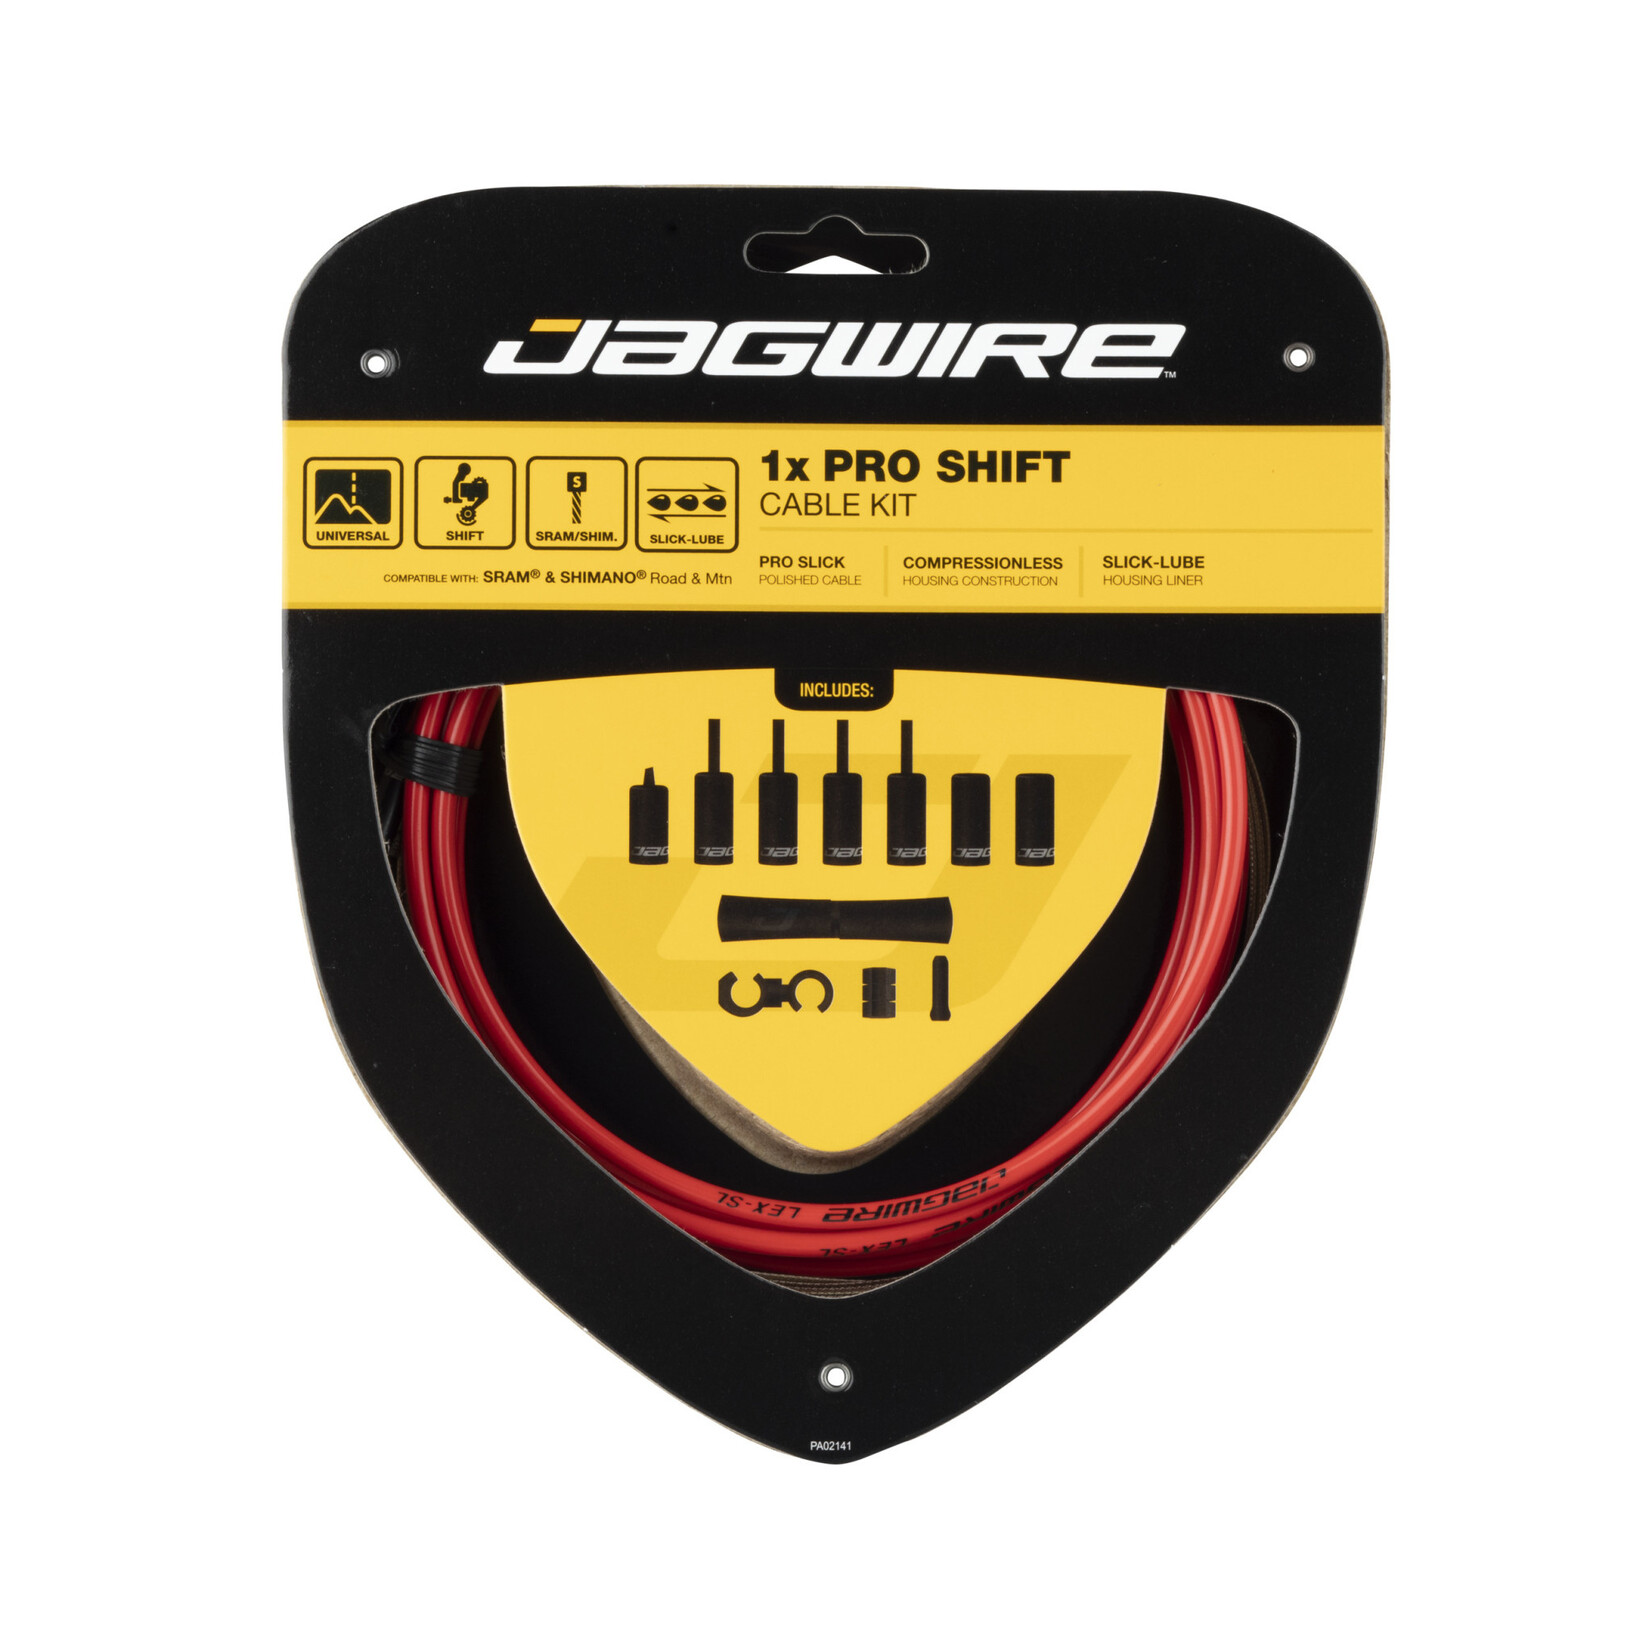 JAGWIRE Jagwire 1x Pro Shift Cable Kit, Shimano/Sram, Road & MTB